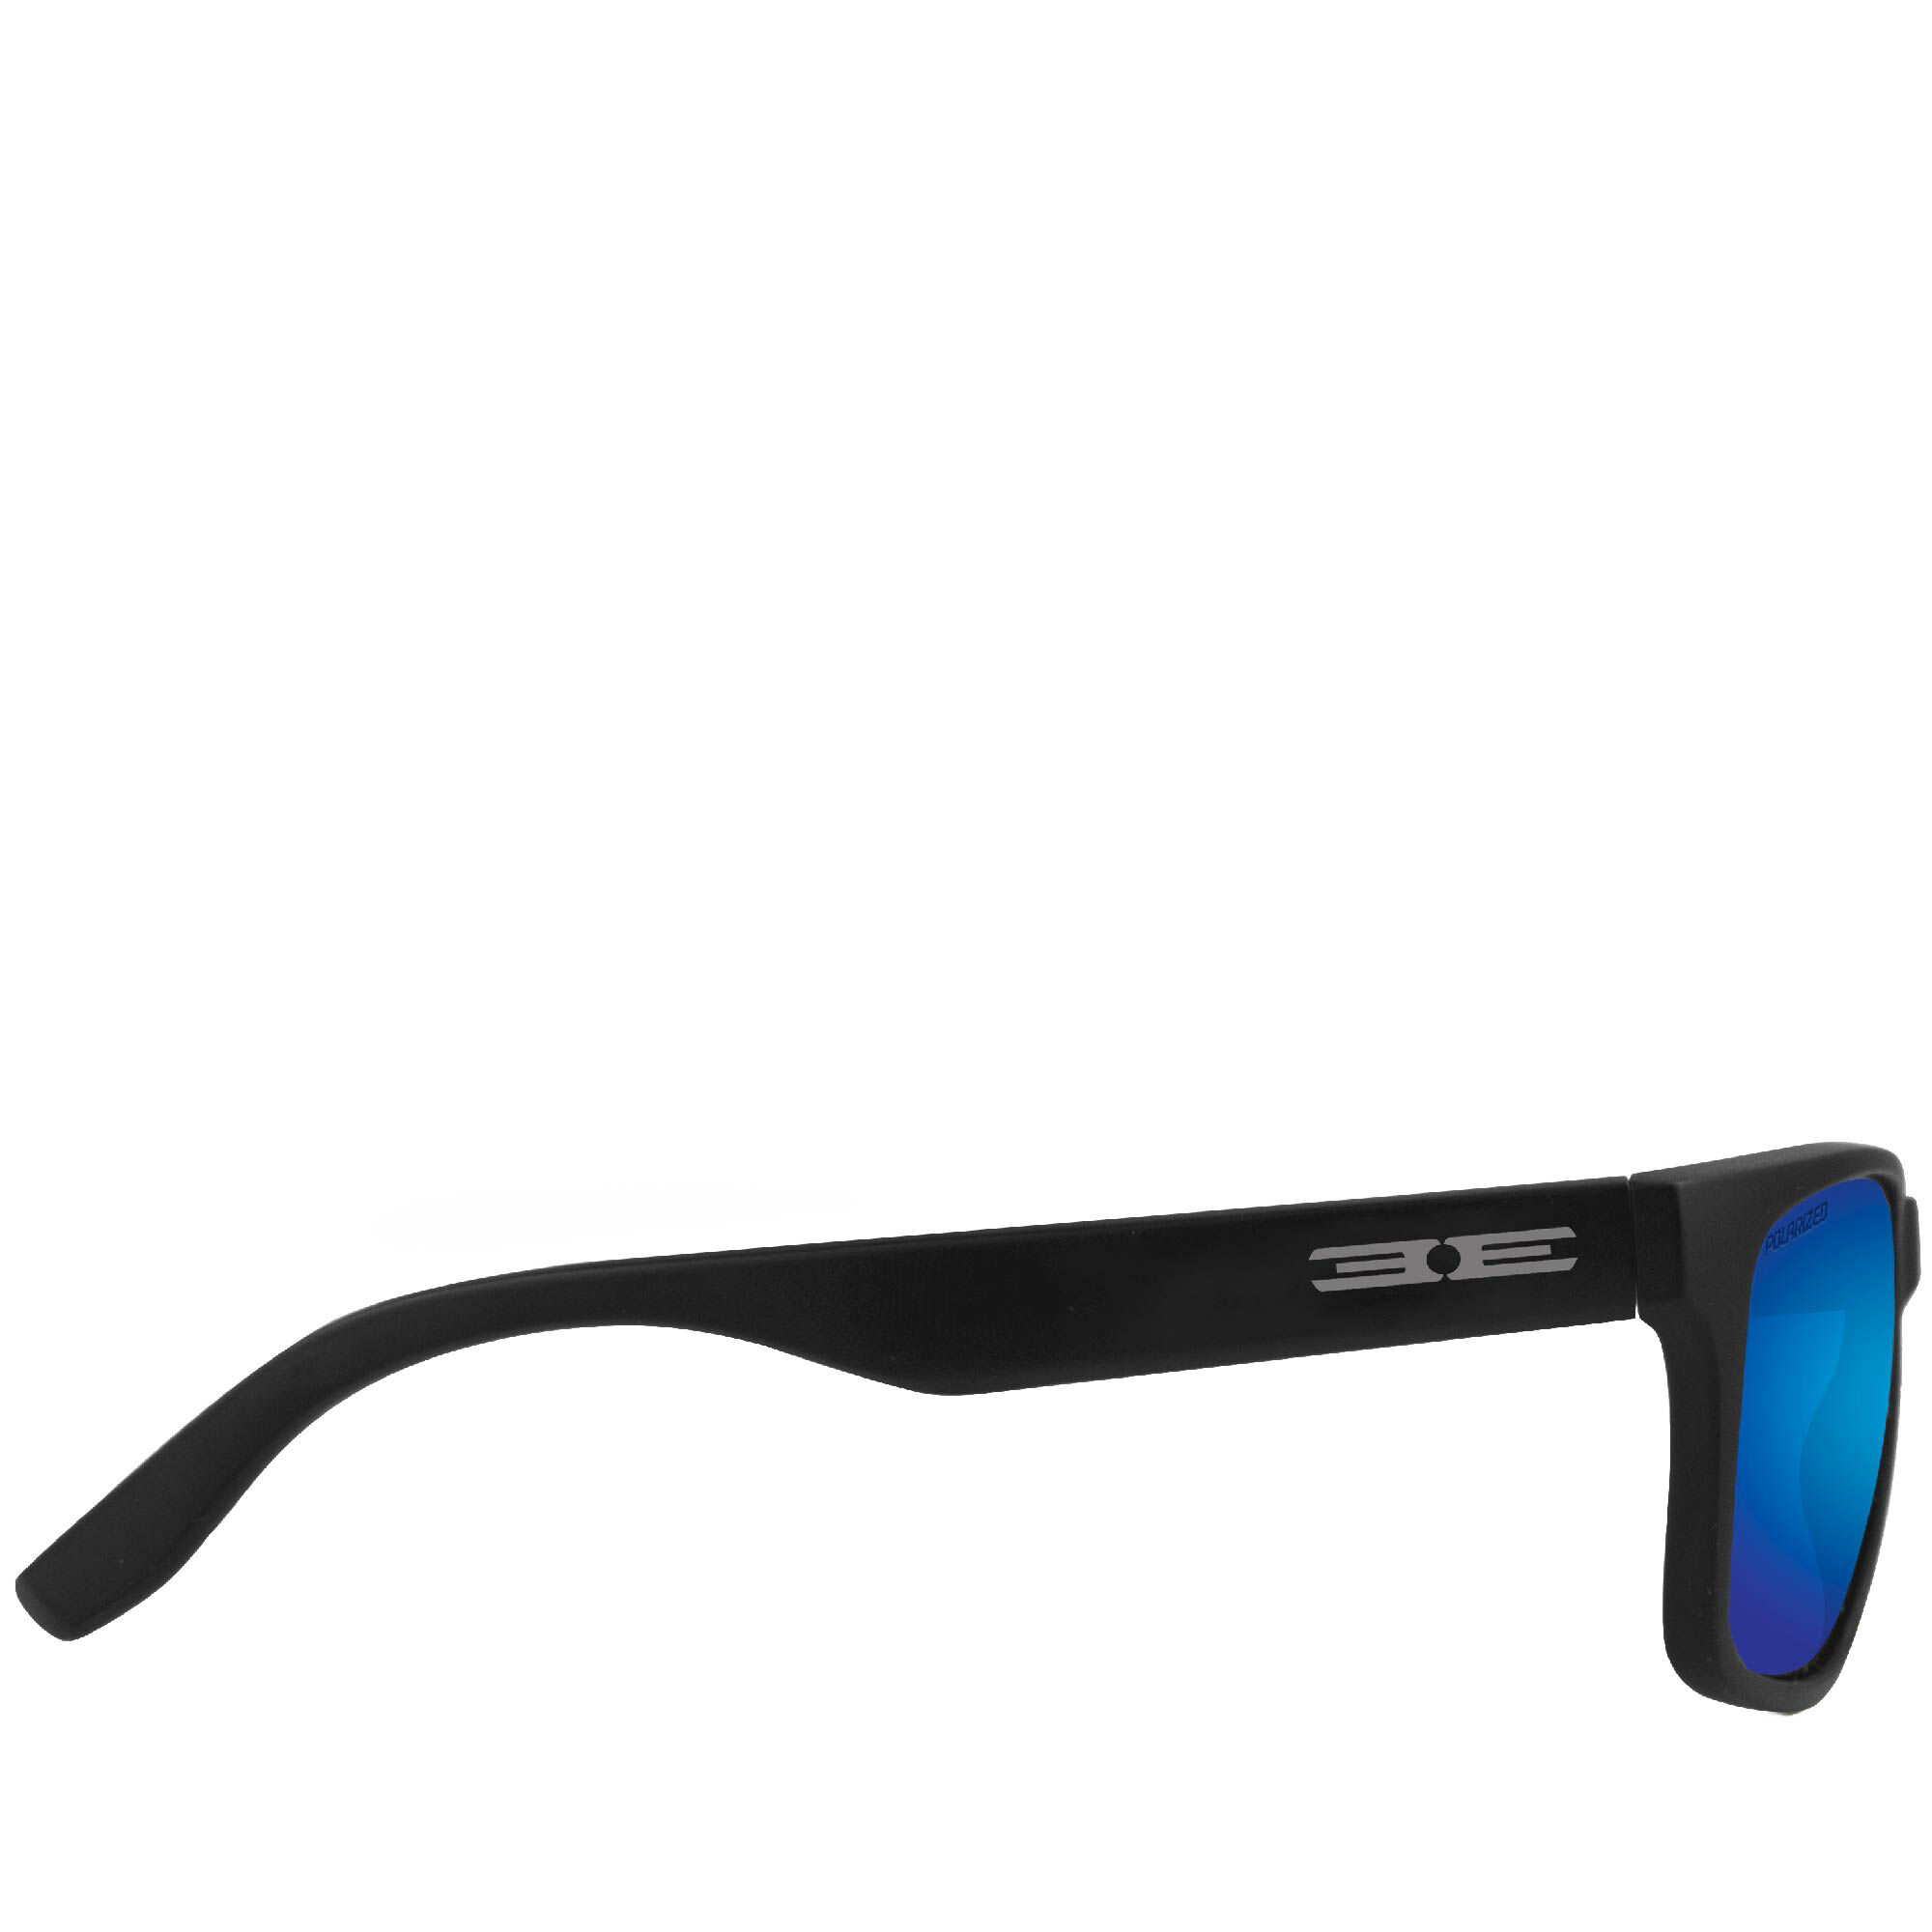 Epoch Eyewear Delta Hydrophobic Sunglasses image